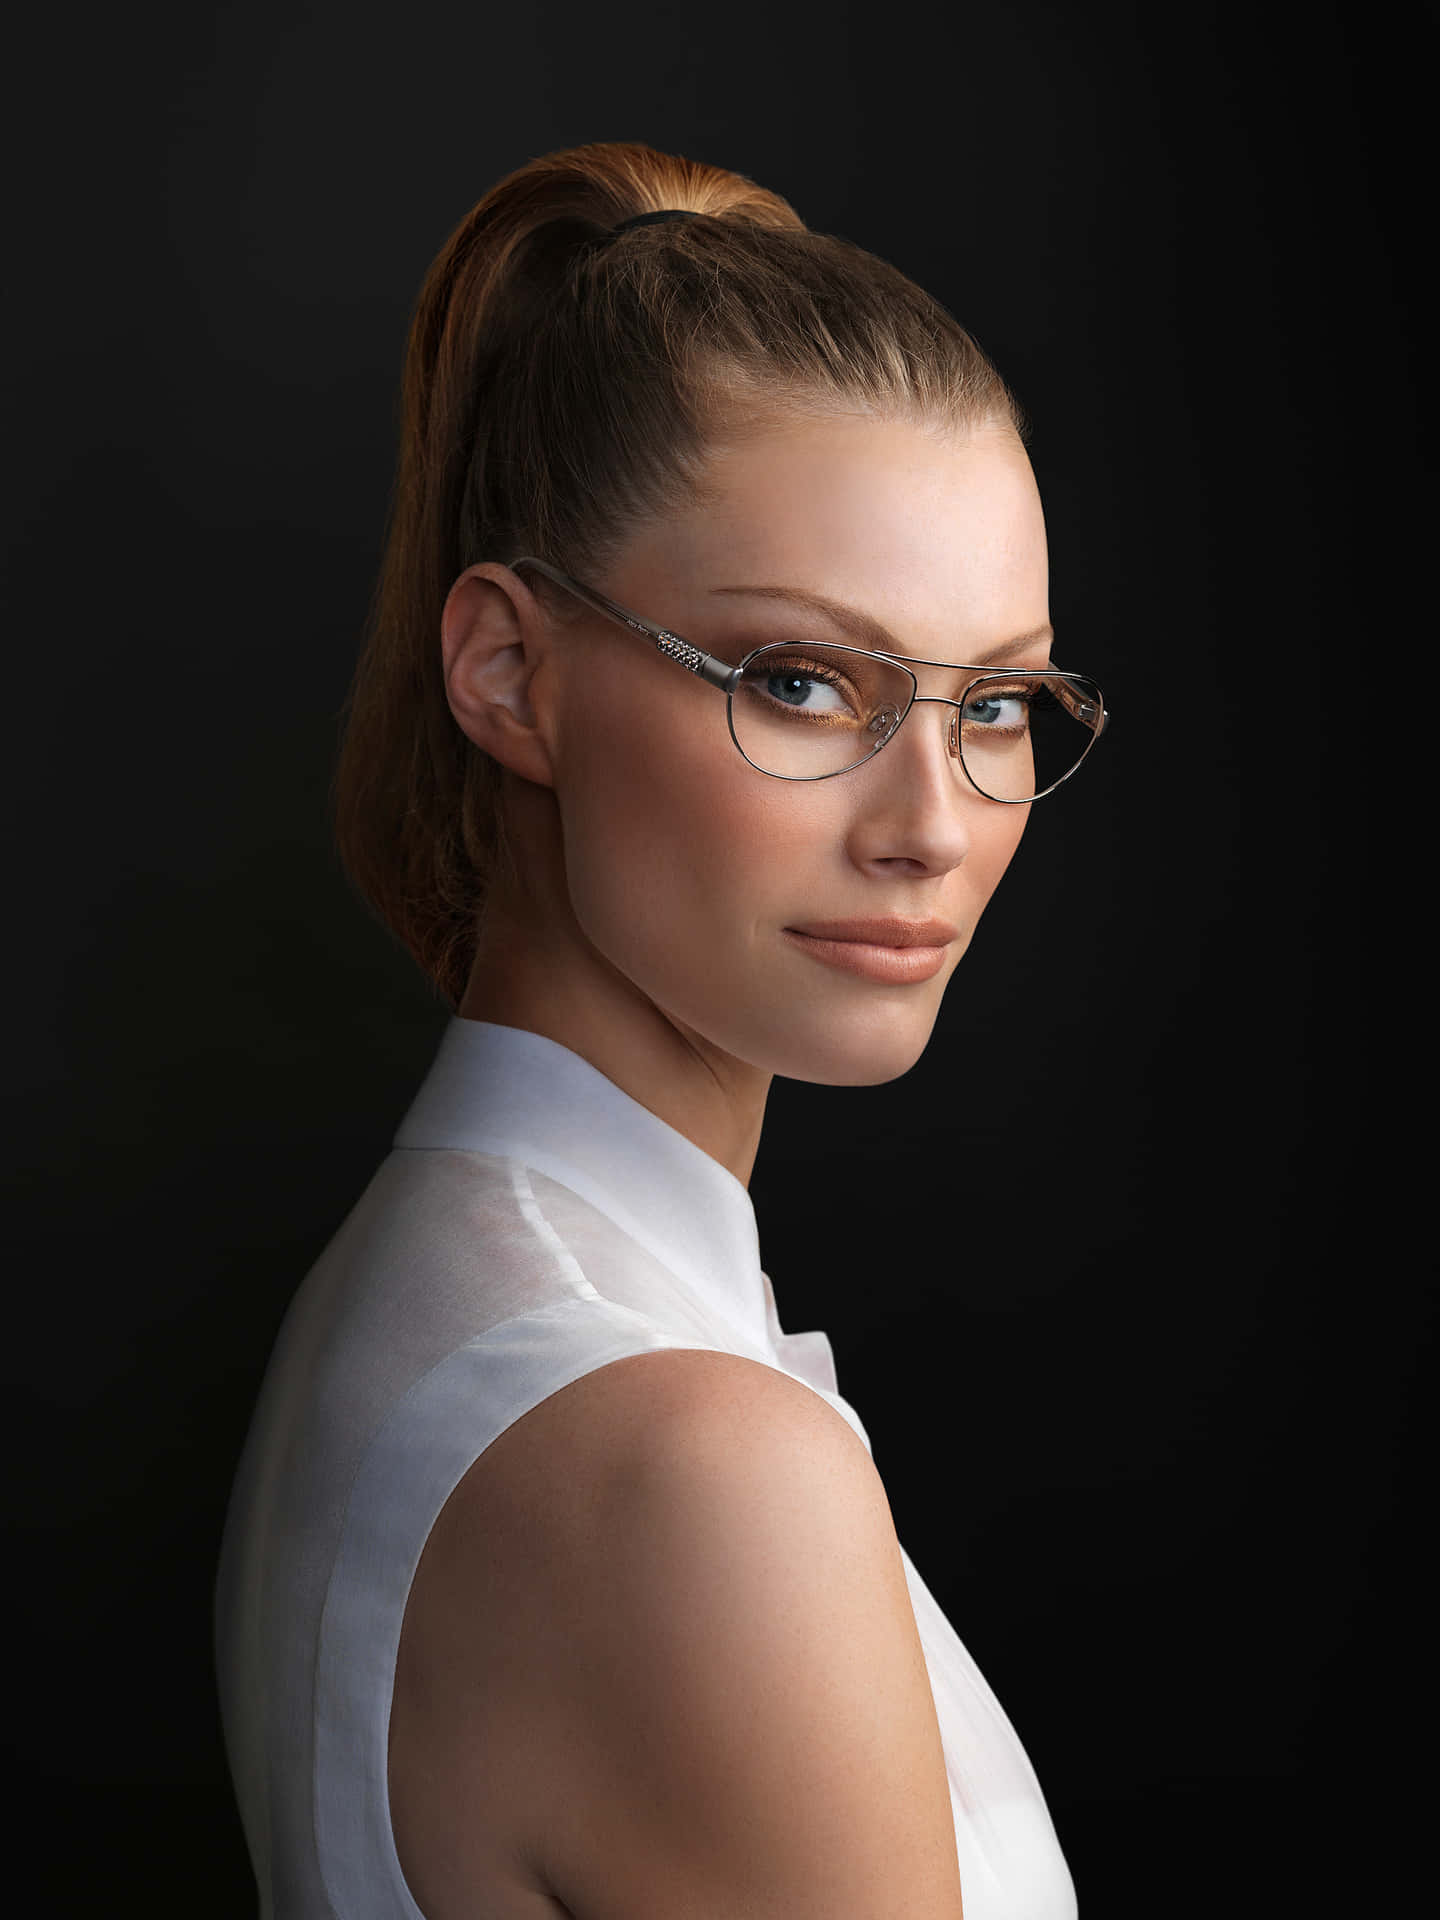 Professional Womanin Glasses Wallpaper